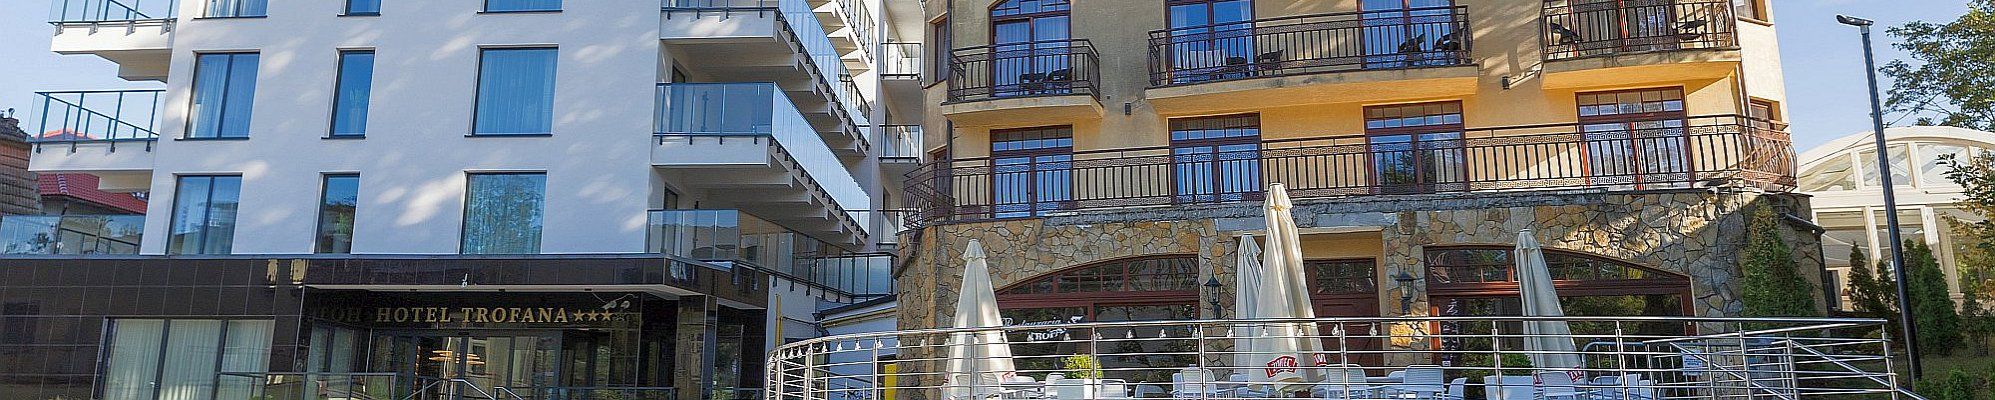 Hotel Trofana Sun & Sea - Kururlaub in Misdroy mit Haustürabholung